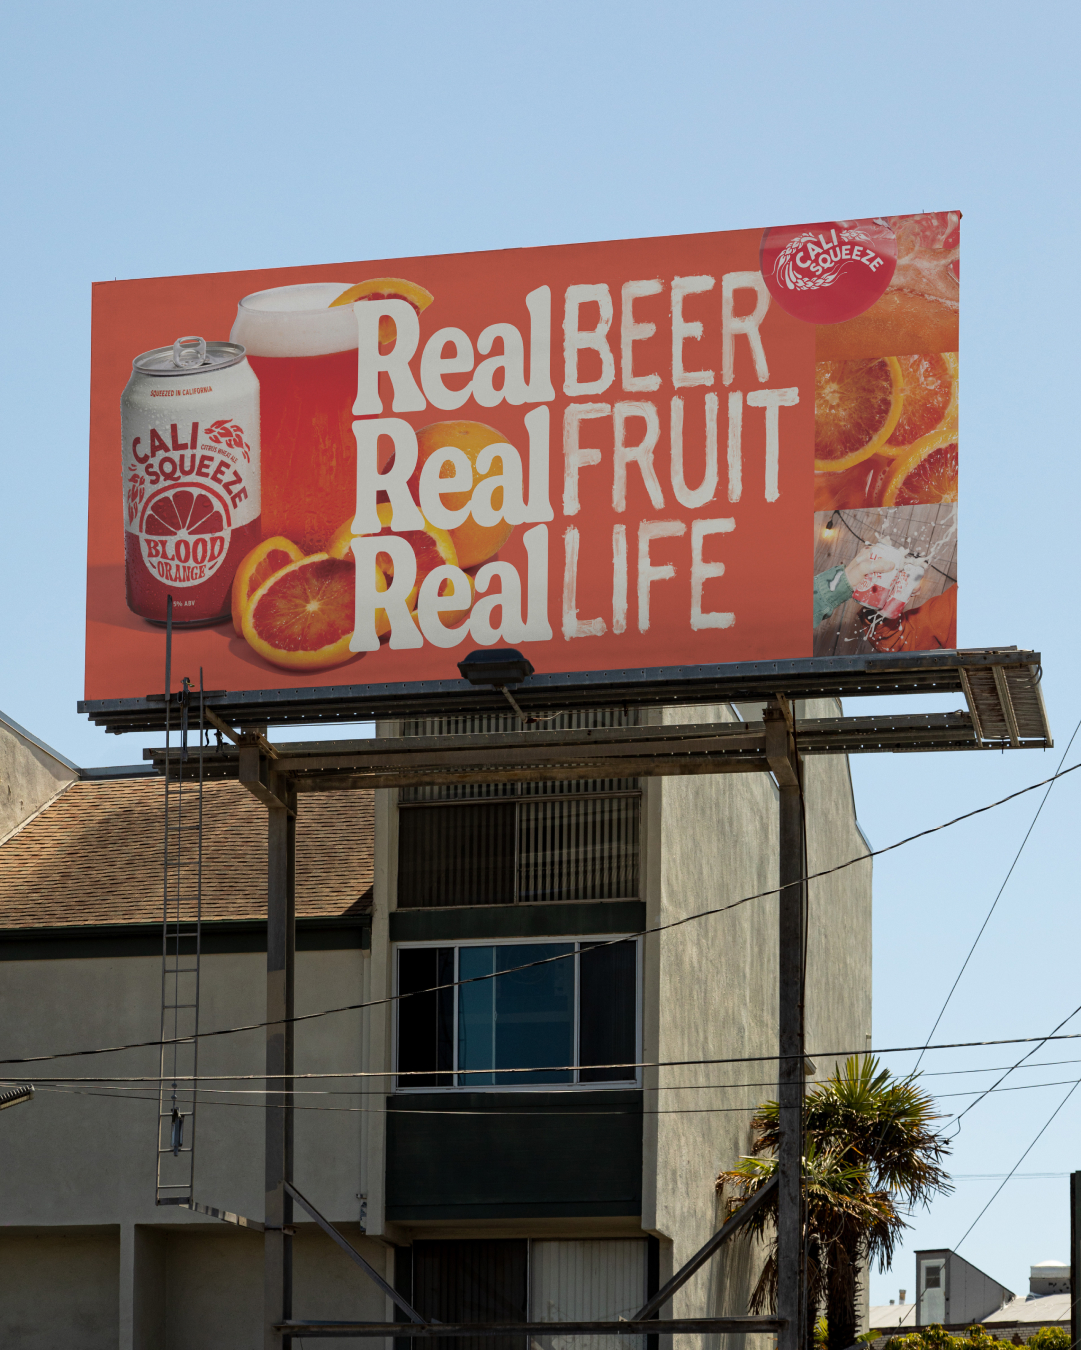 billboard mockup